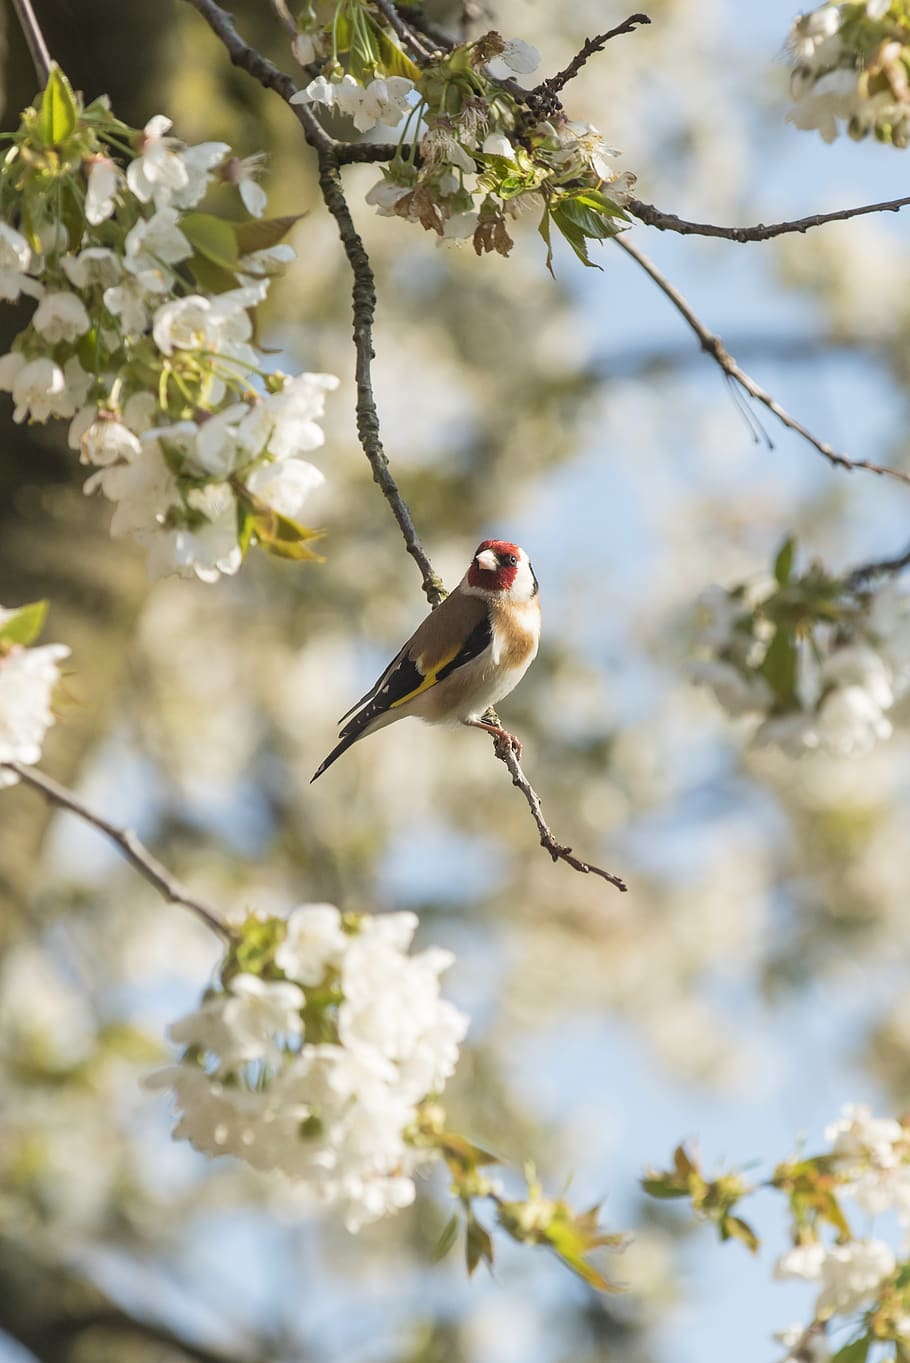 stieglitz, goldfinch, bird, cherry tree, cherry blossom, bird in tree, plant, animal themes, animal, flower